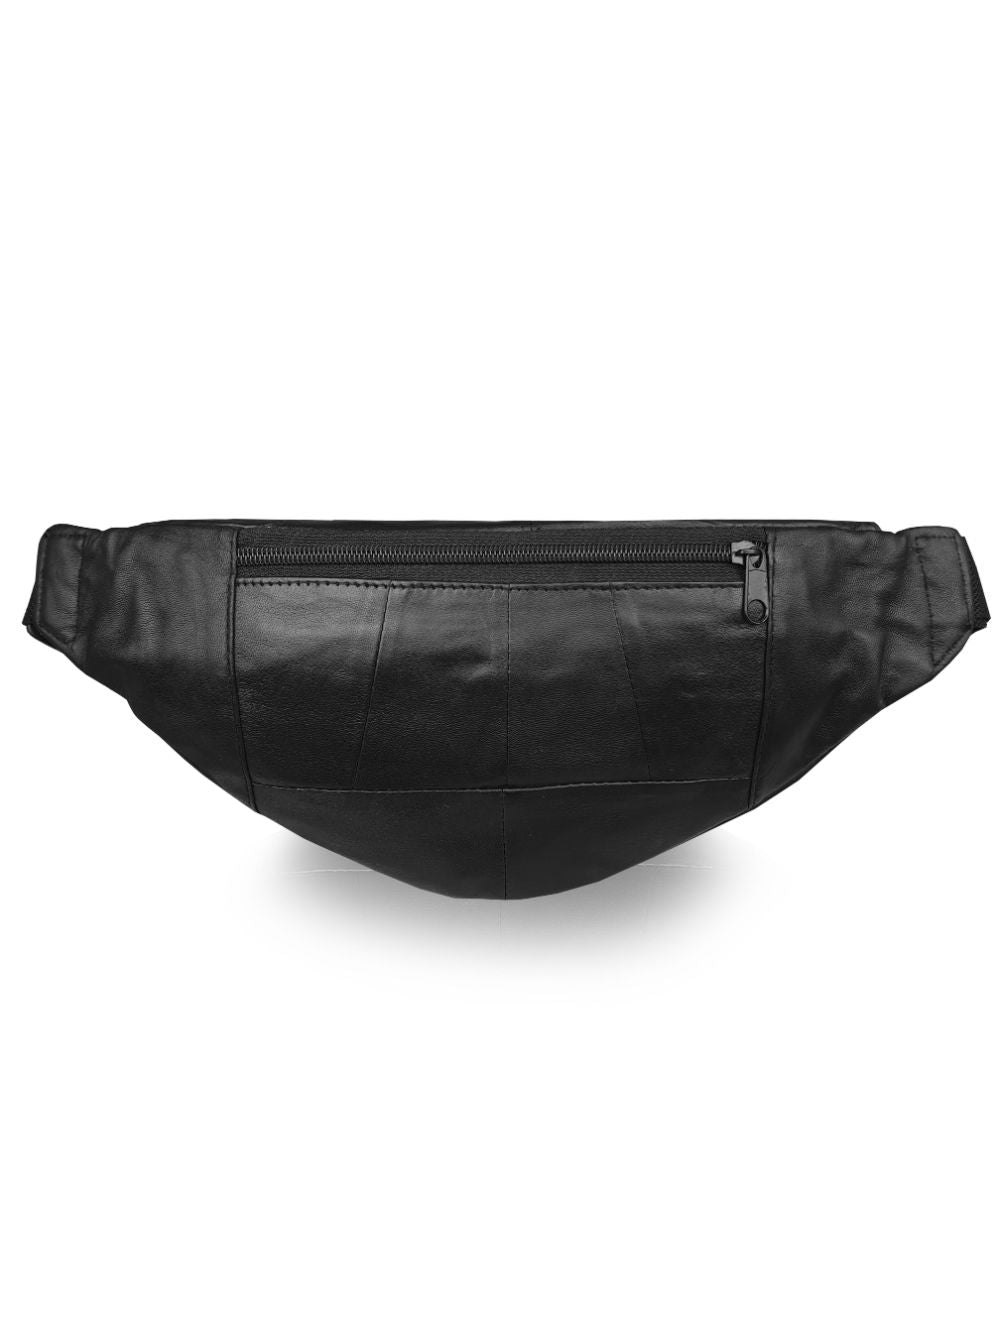 Leather Travel Bumbag - Holiday Money Belt, Festival Waist Pack - R140